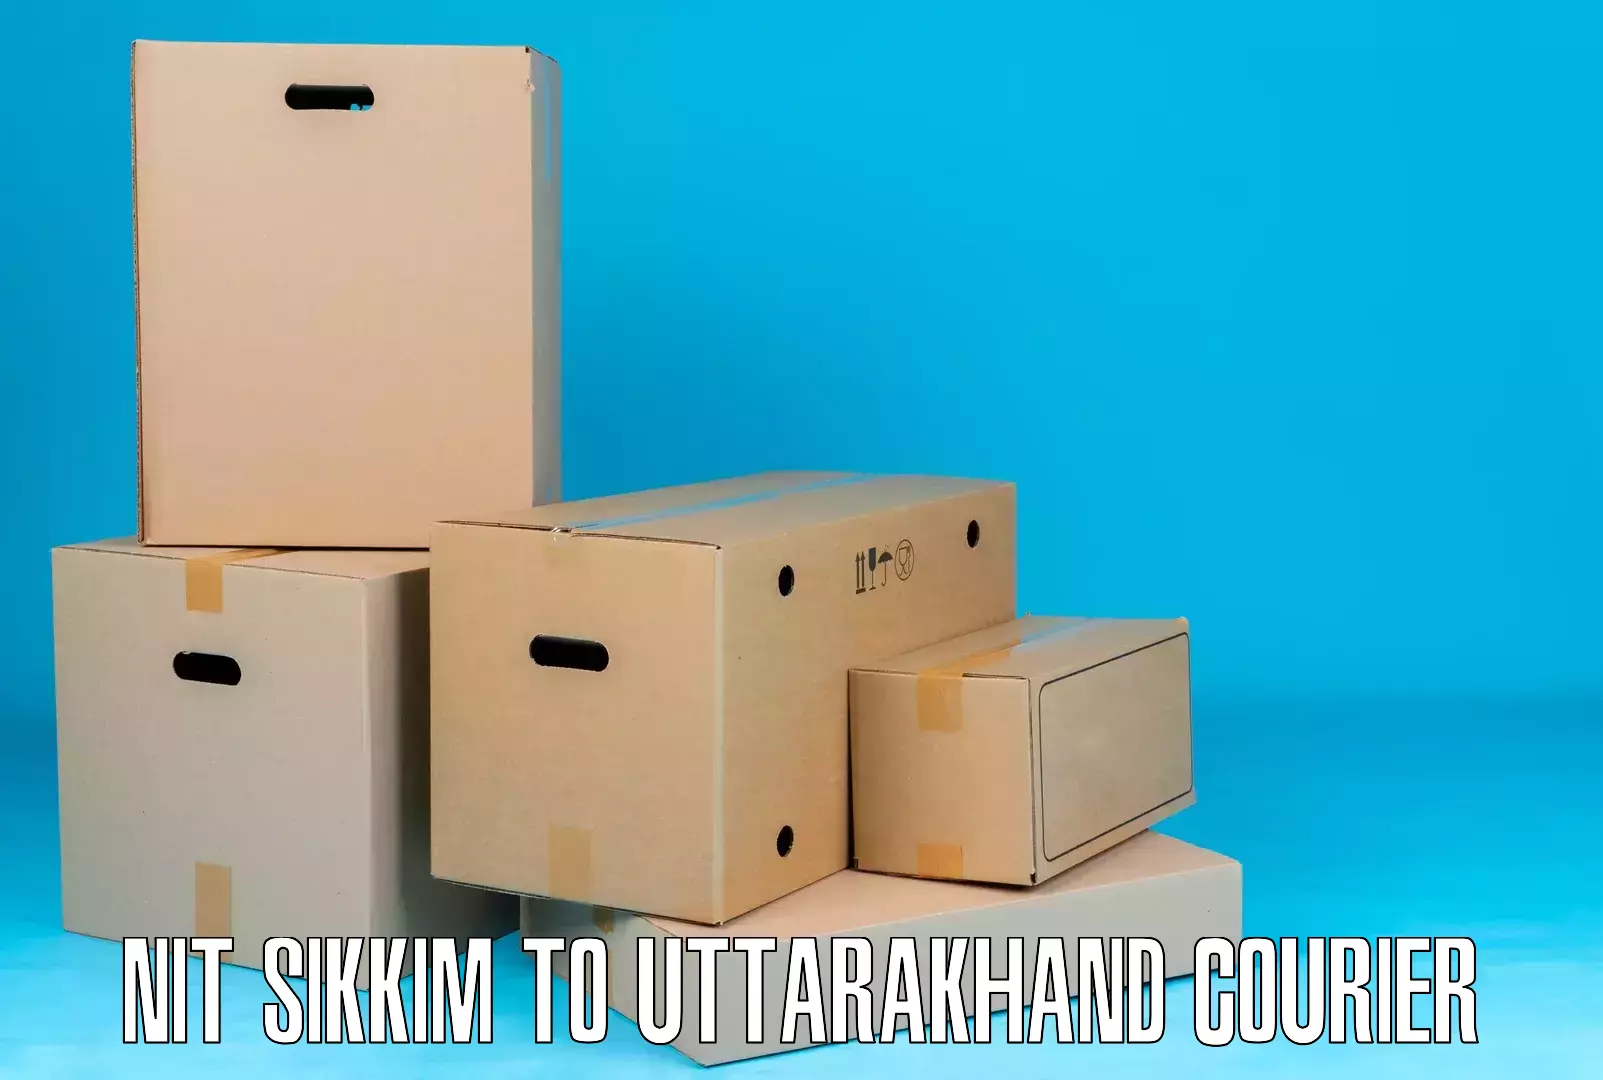 Pharmaceutical courier NIT Sikkim to Uttarakhand